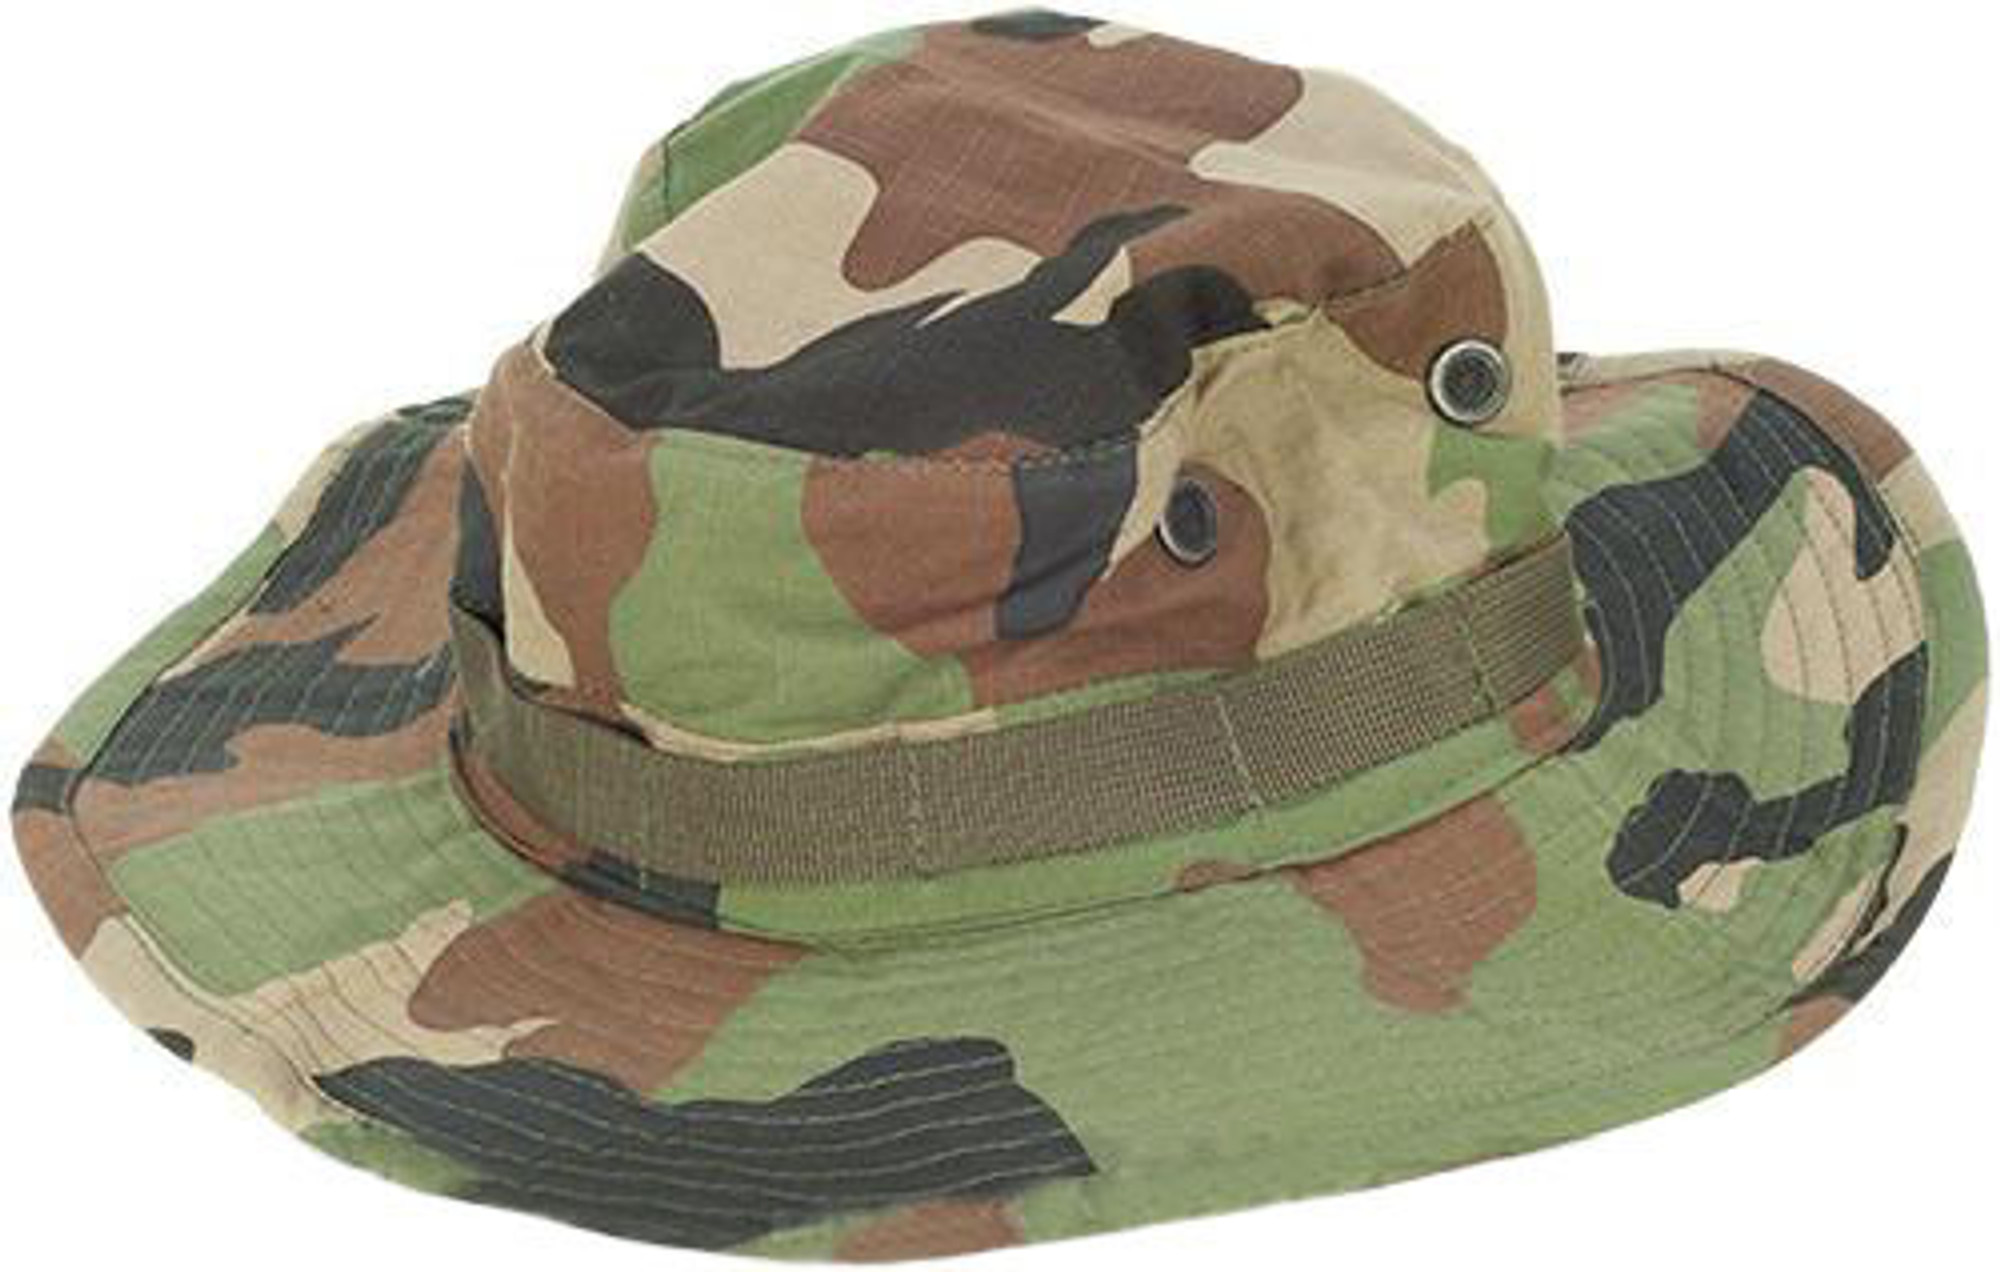 Matrix Lightweight Rip Stop Jungle Boonie Hat (Color: Woodland Camo / Small)